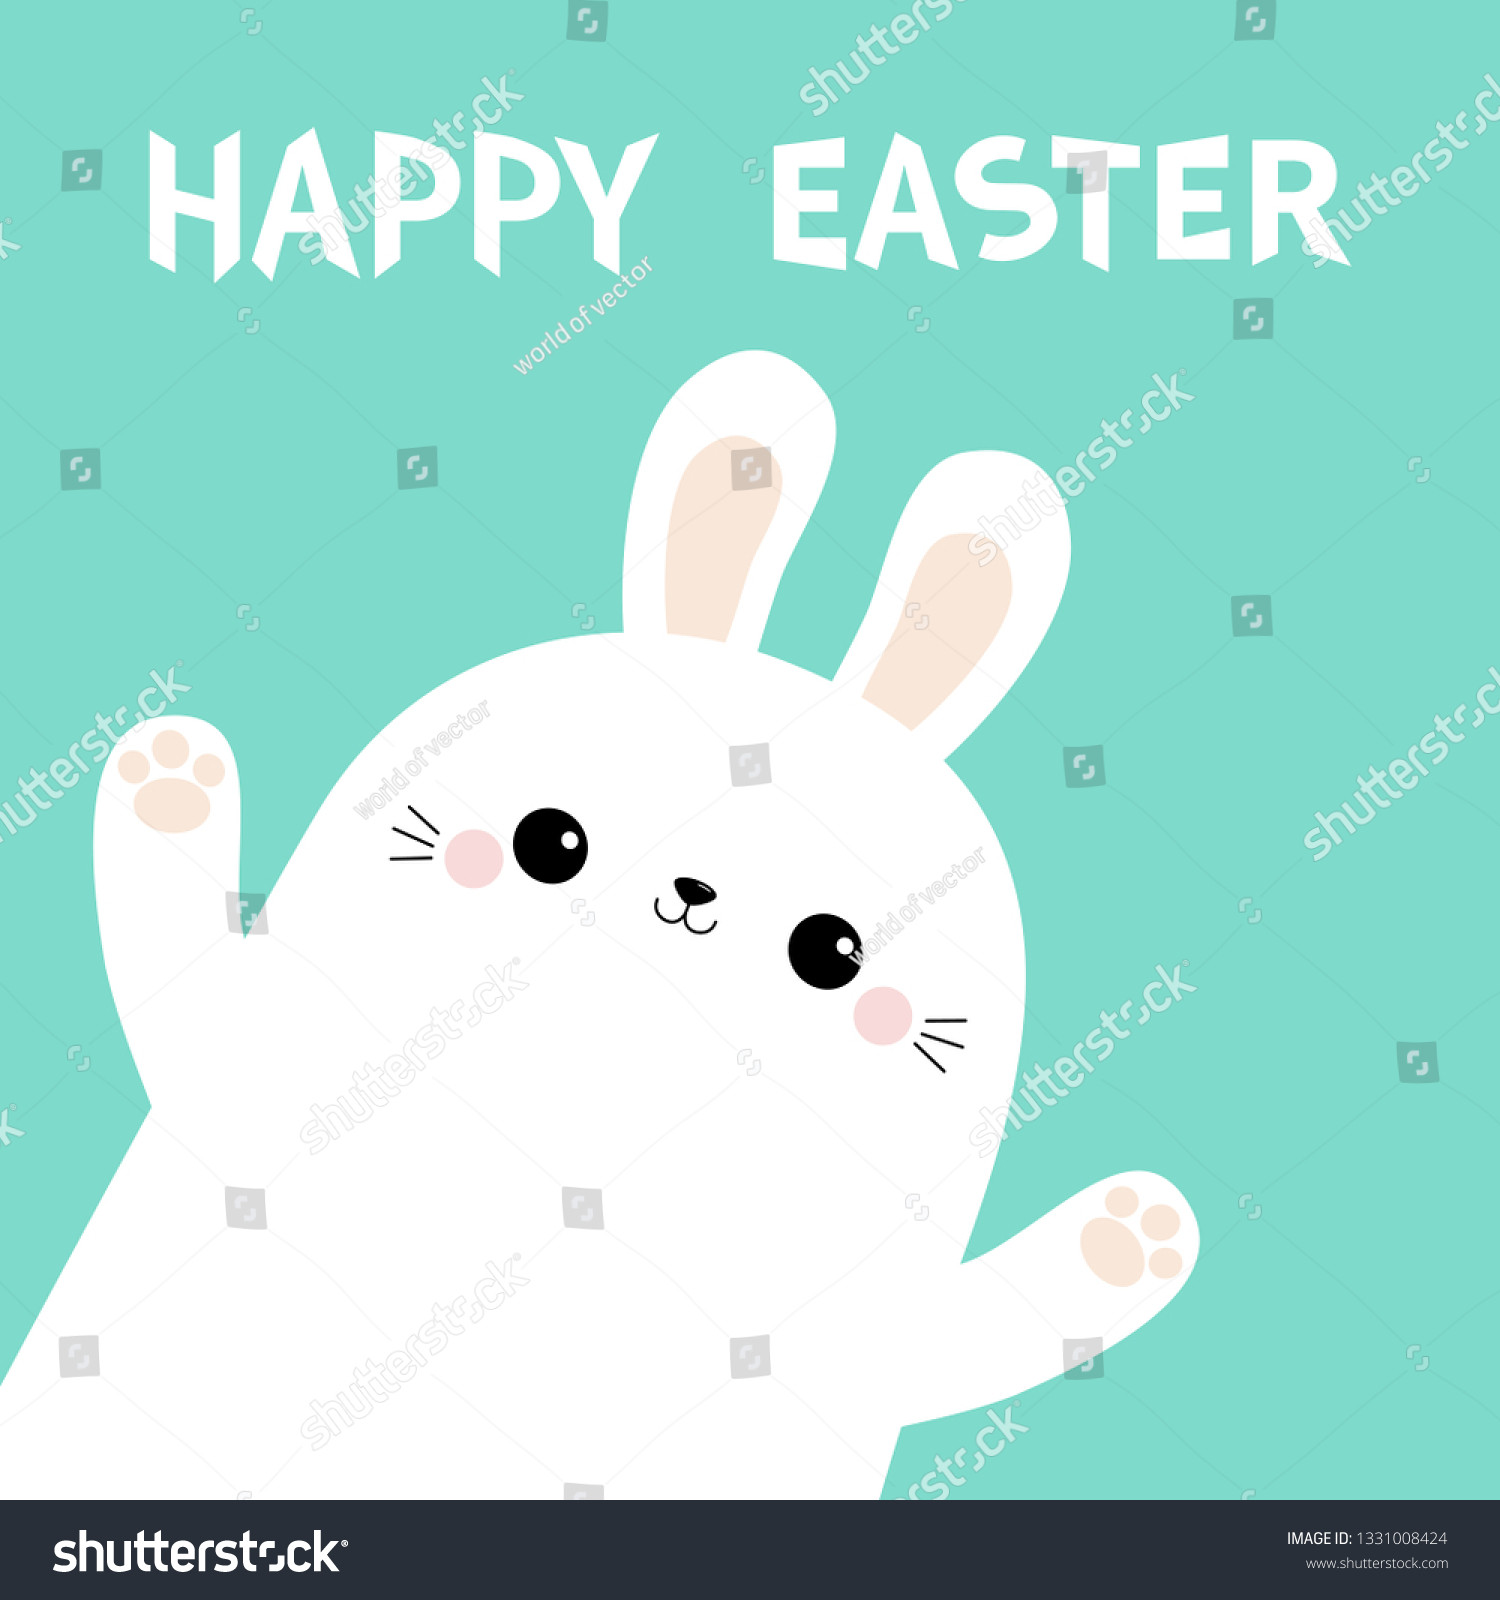 stock vector happy easter rabbit bunny head face in the corner waving paw print hand cute cartoon kawaii